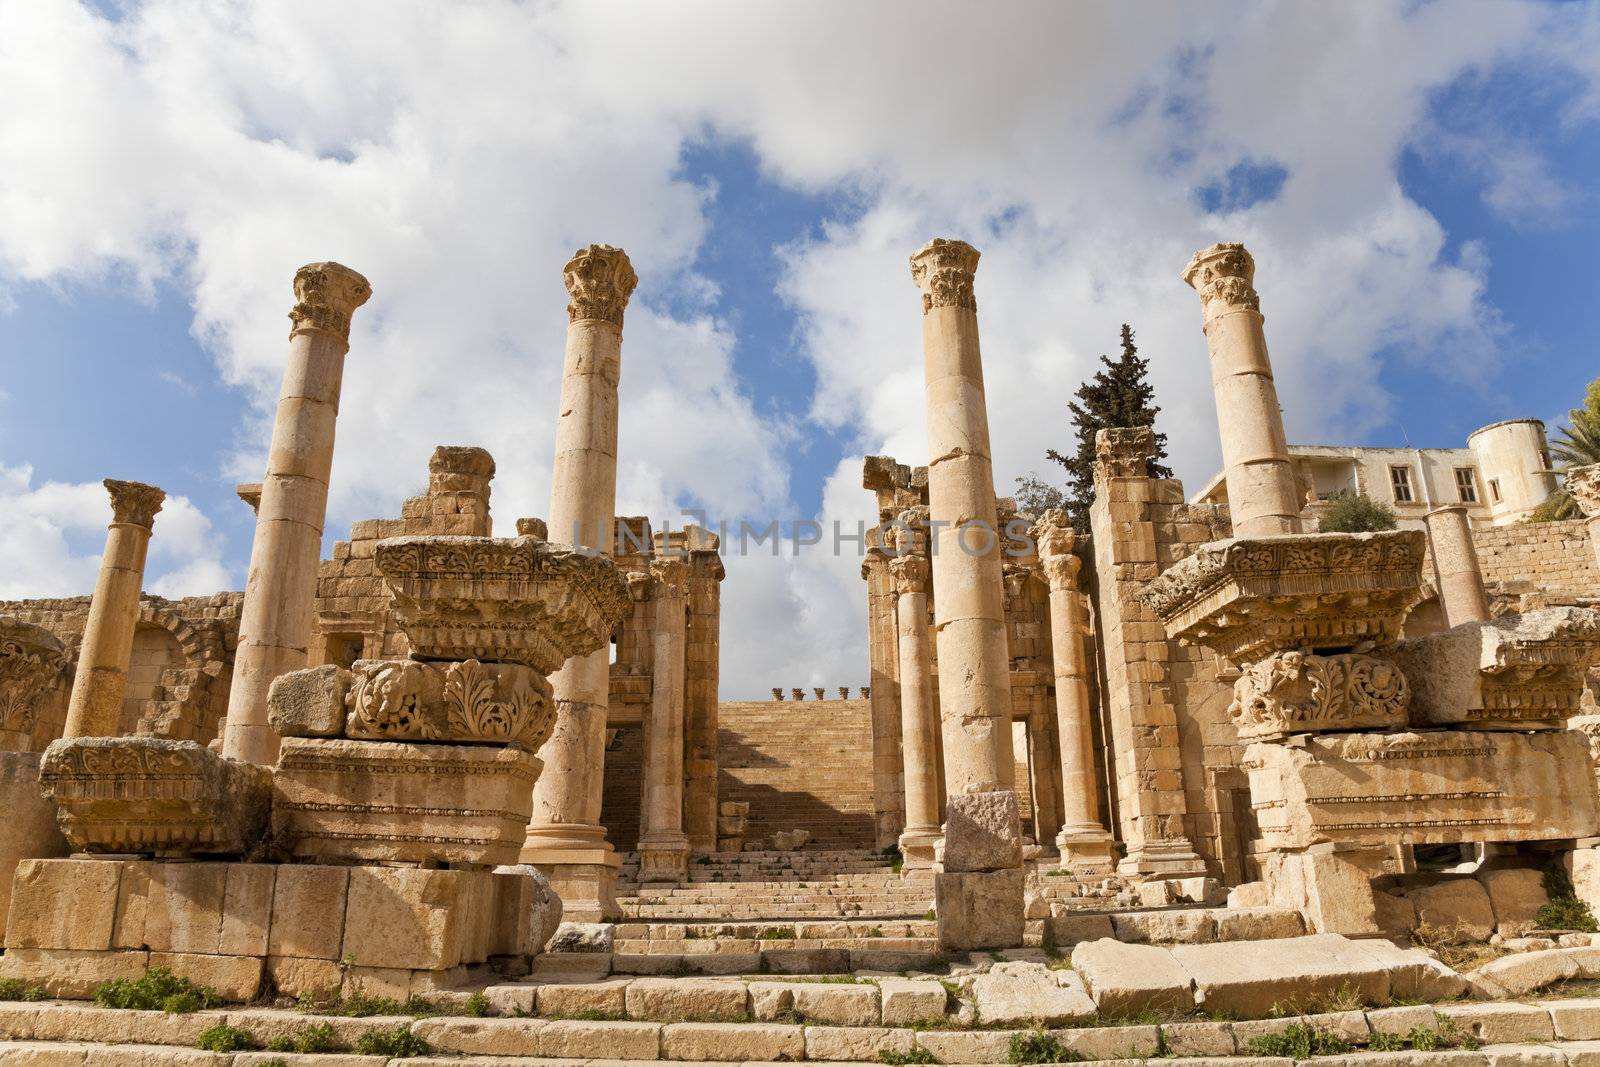 the propylaea, a monumental gate leading to the temple of artemis, jerash, jordan